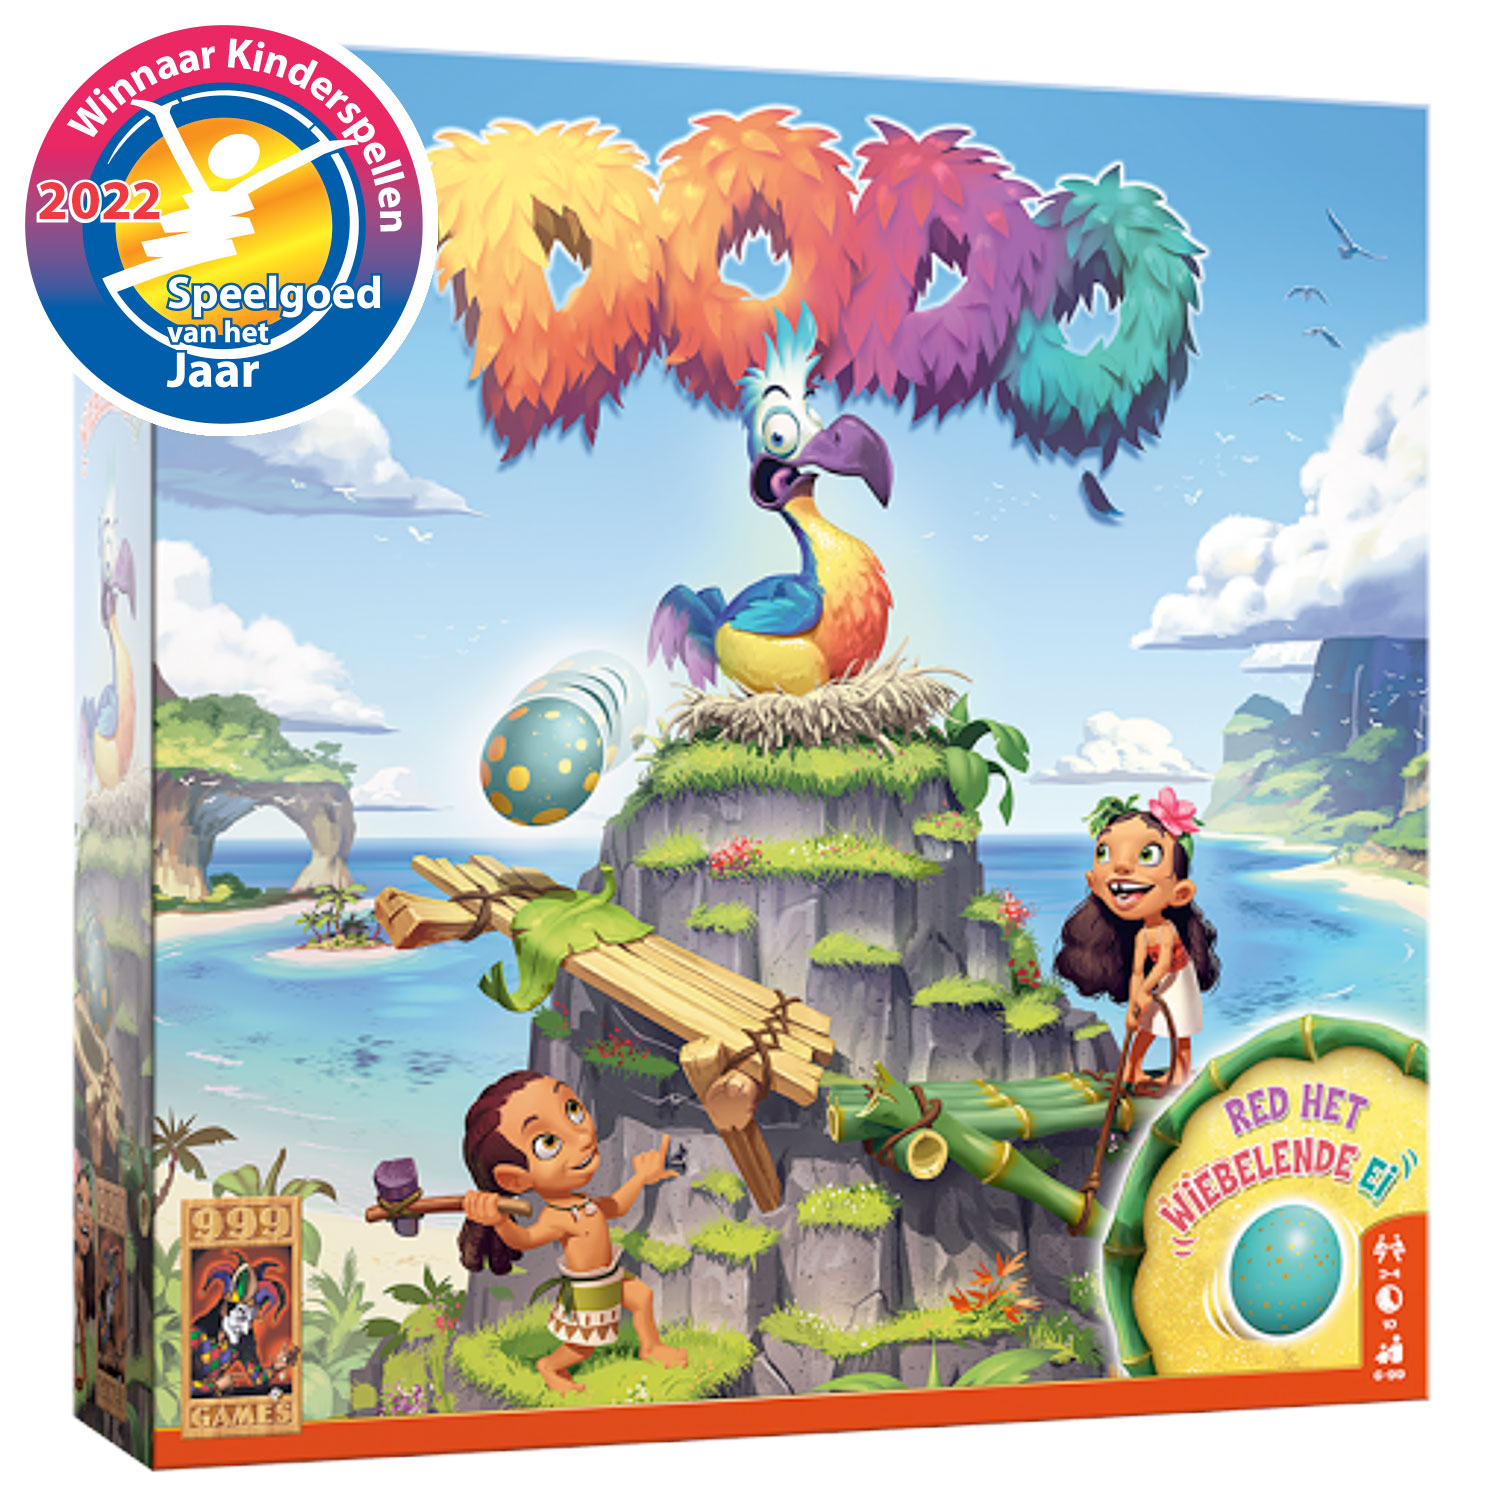 Tous au dodo, Board Game